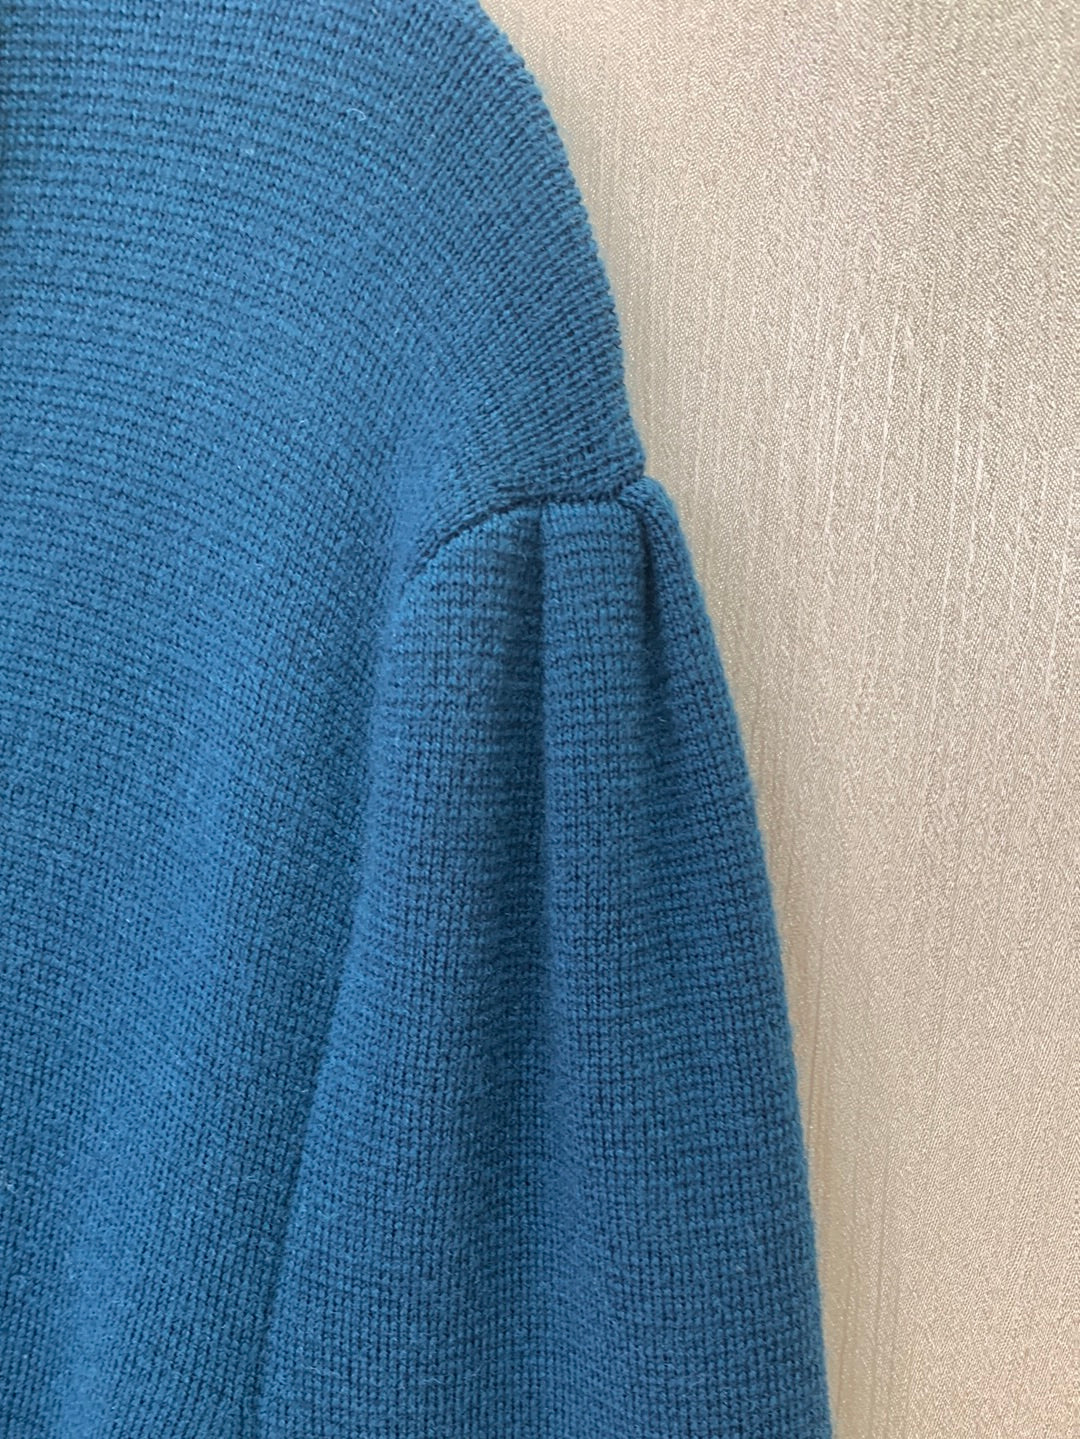 TALBOTS dark blue 100% Merino Wool Sweater Blazer Cardigan - XL